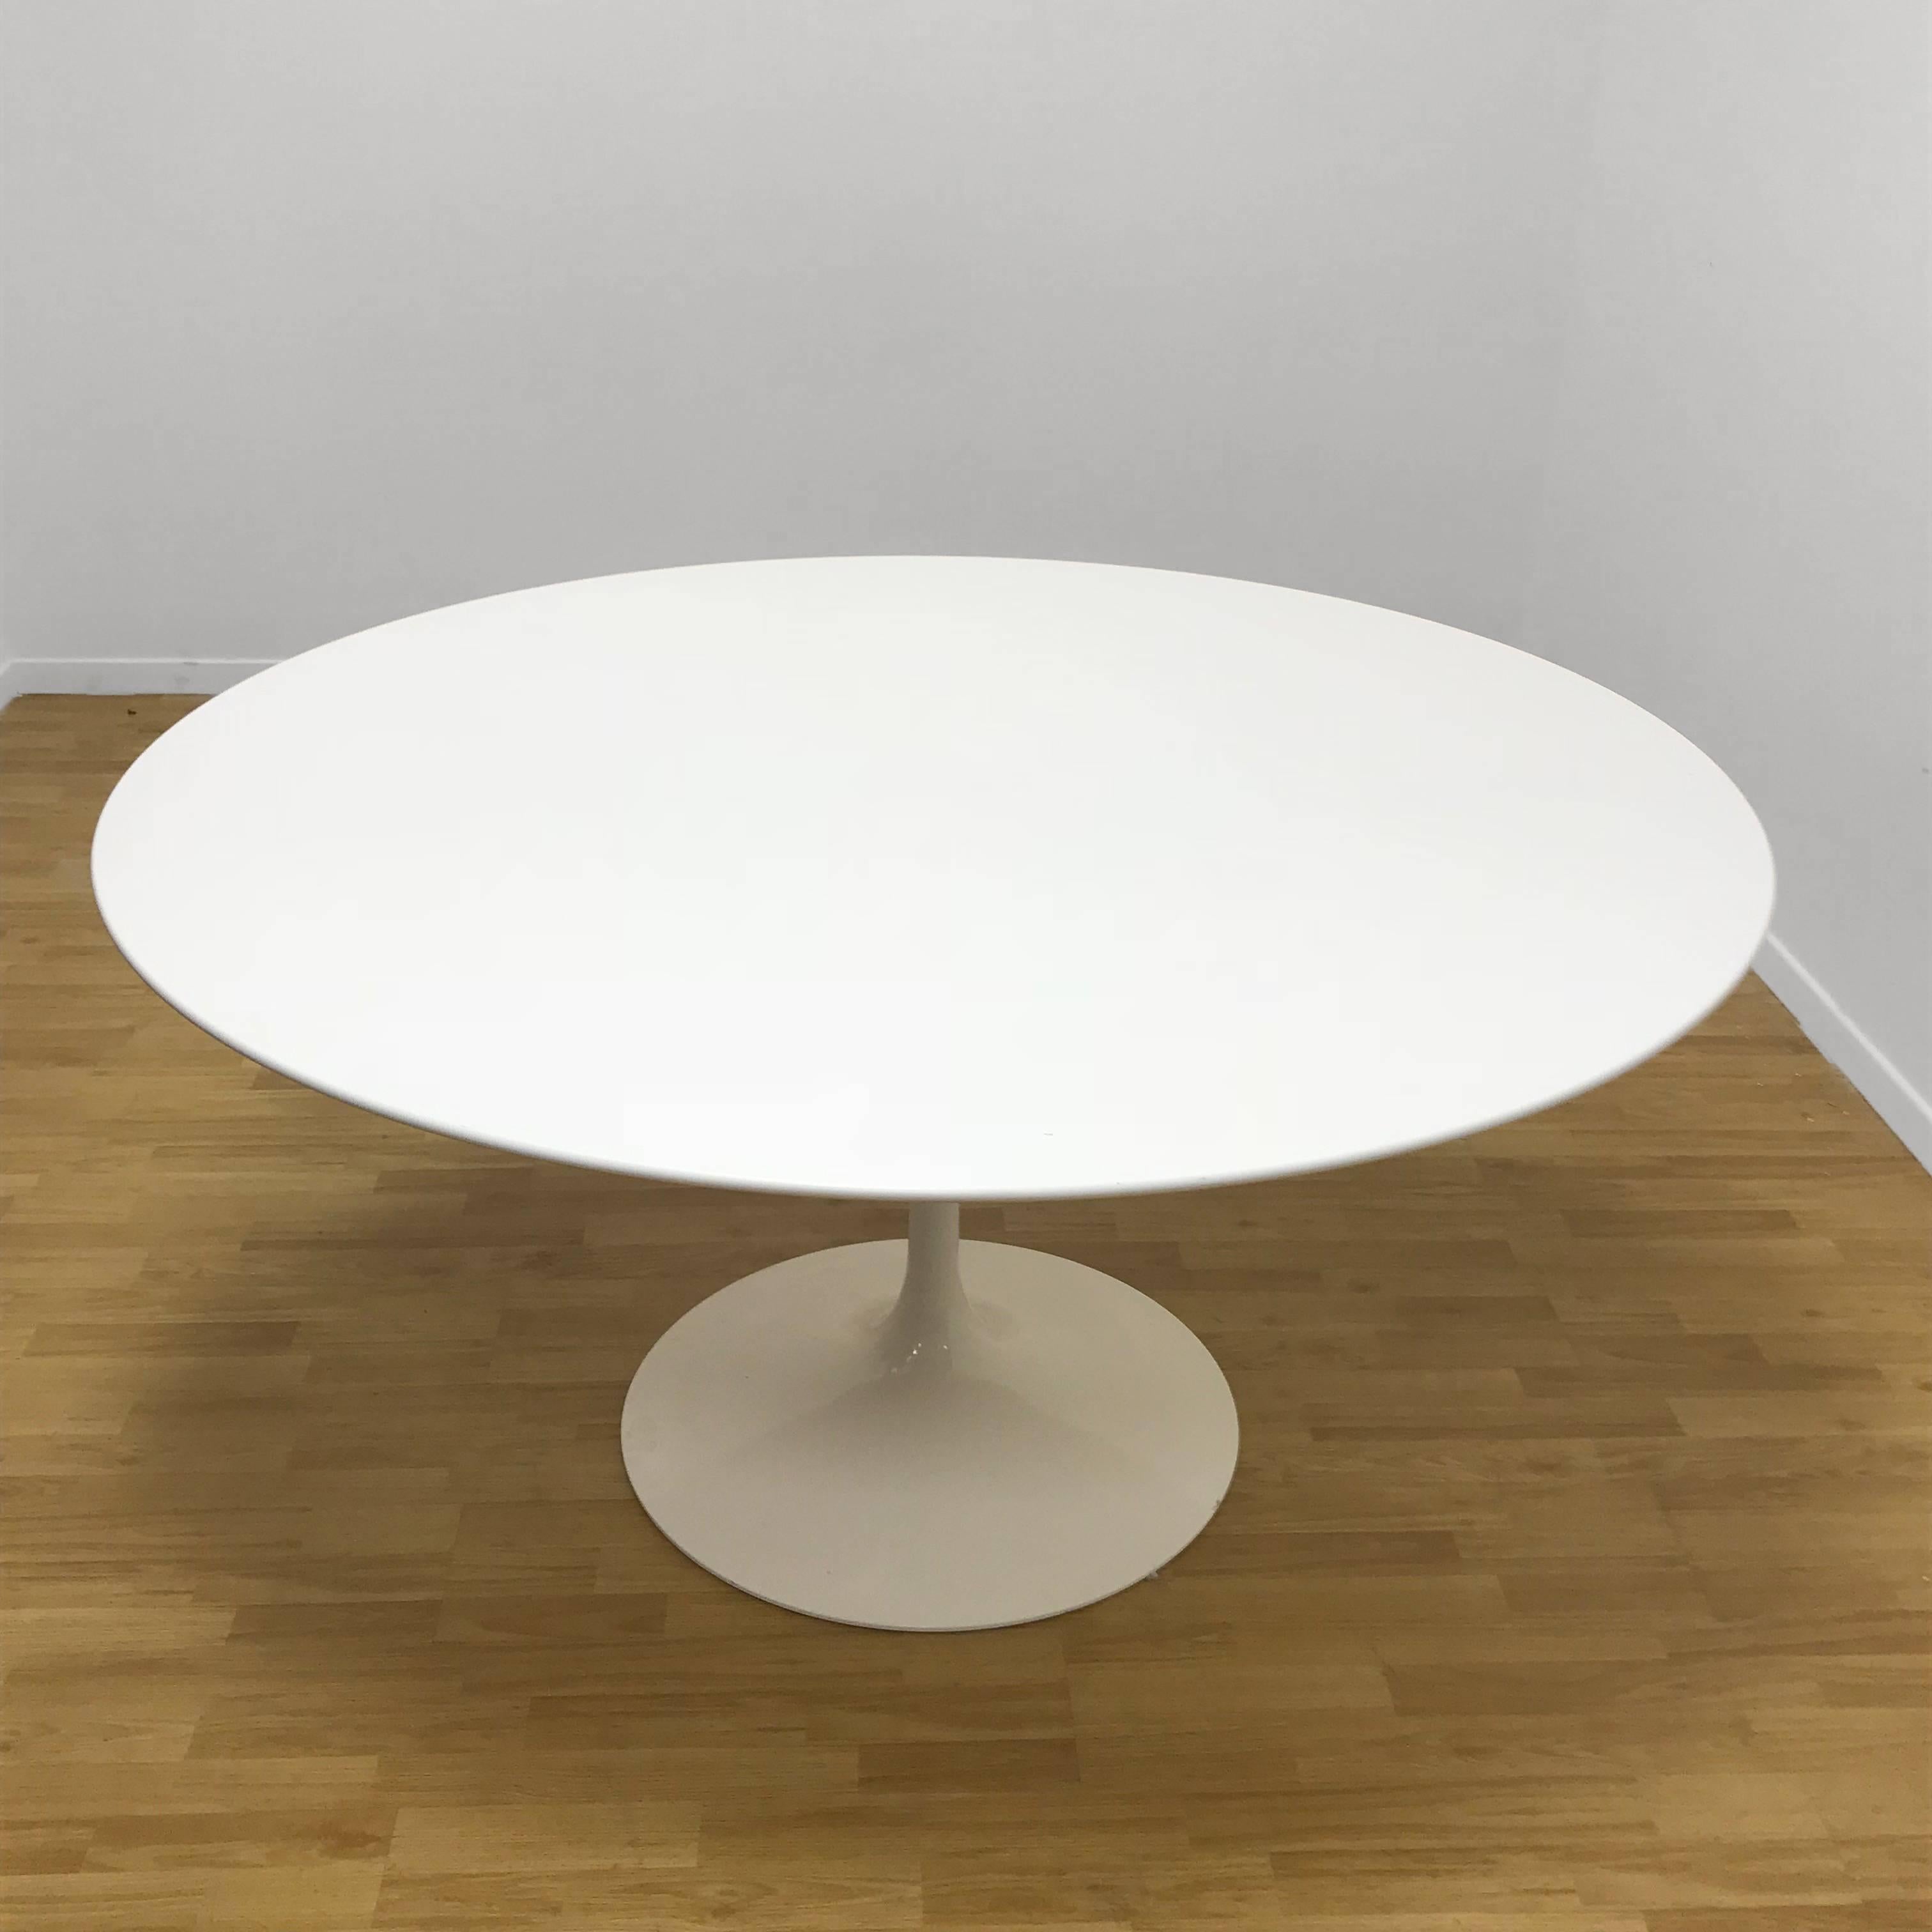 Central American Original Tulip Table by Eero Saarinen Signed Knoll Studio, Round Table